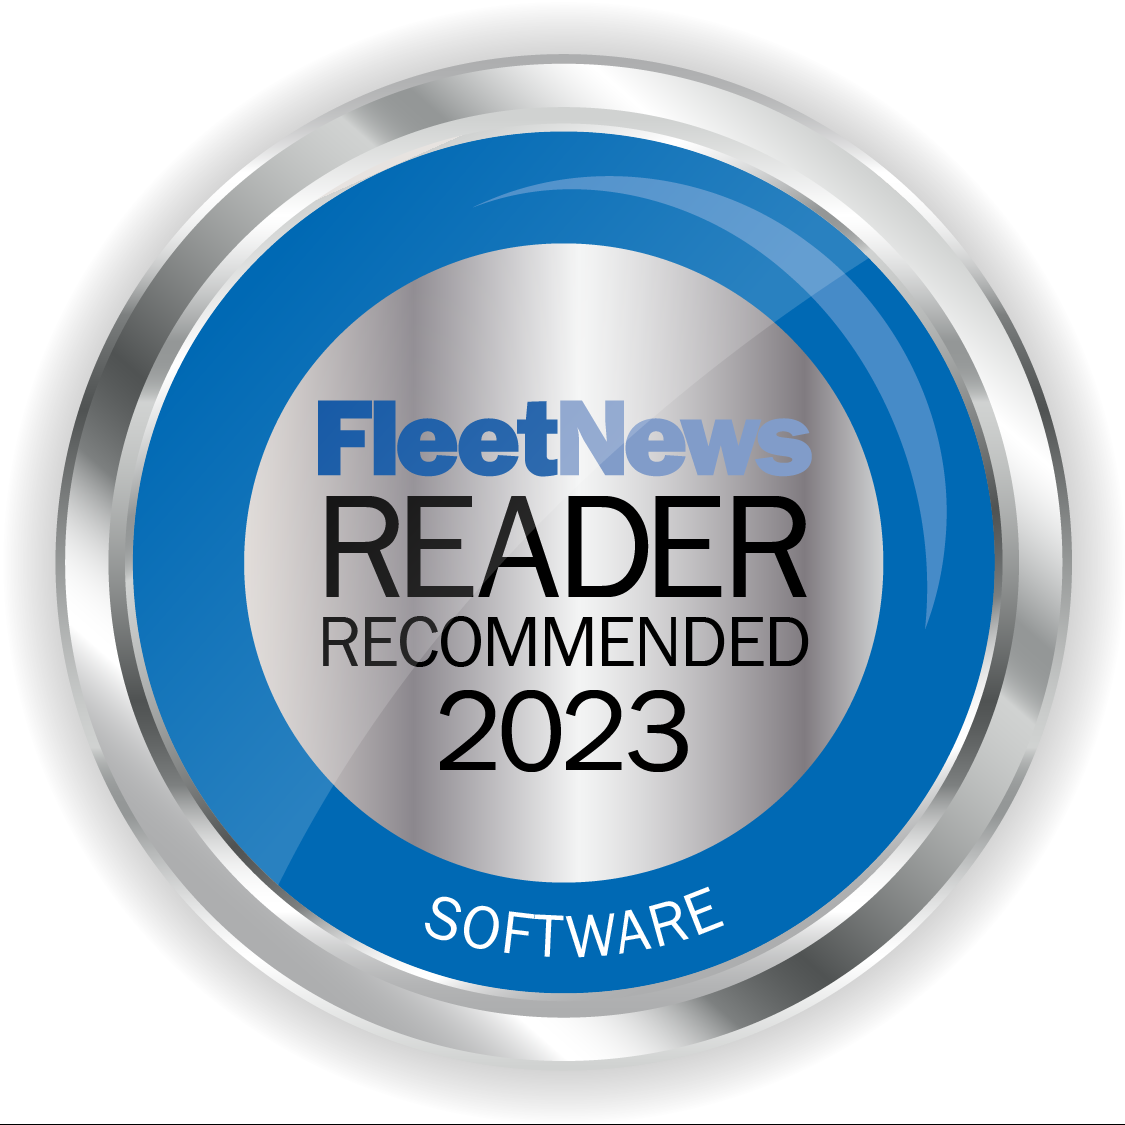 Fleet News Reader Recommended 2023 Software